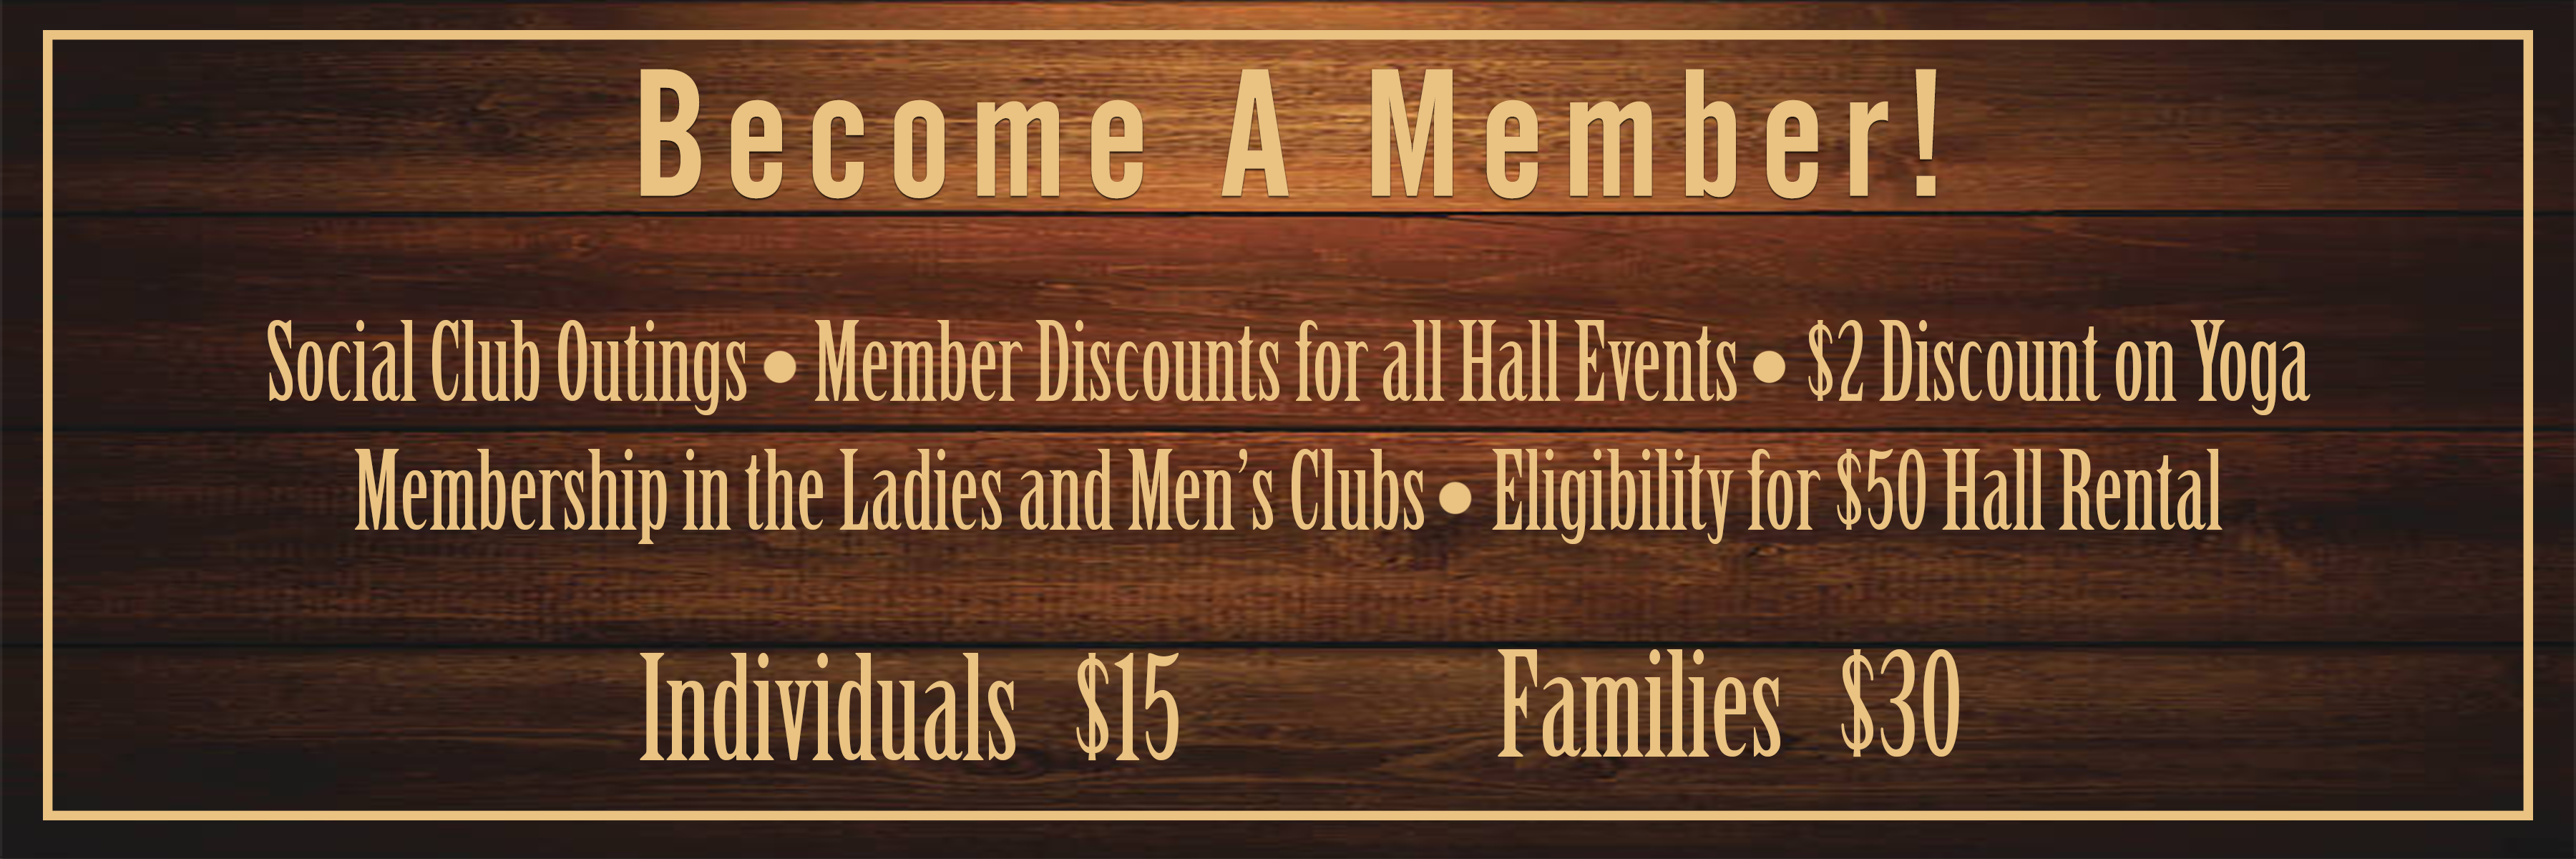 Member Benefits Poster